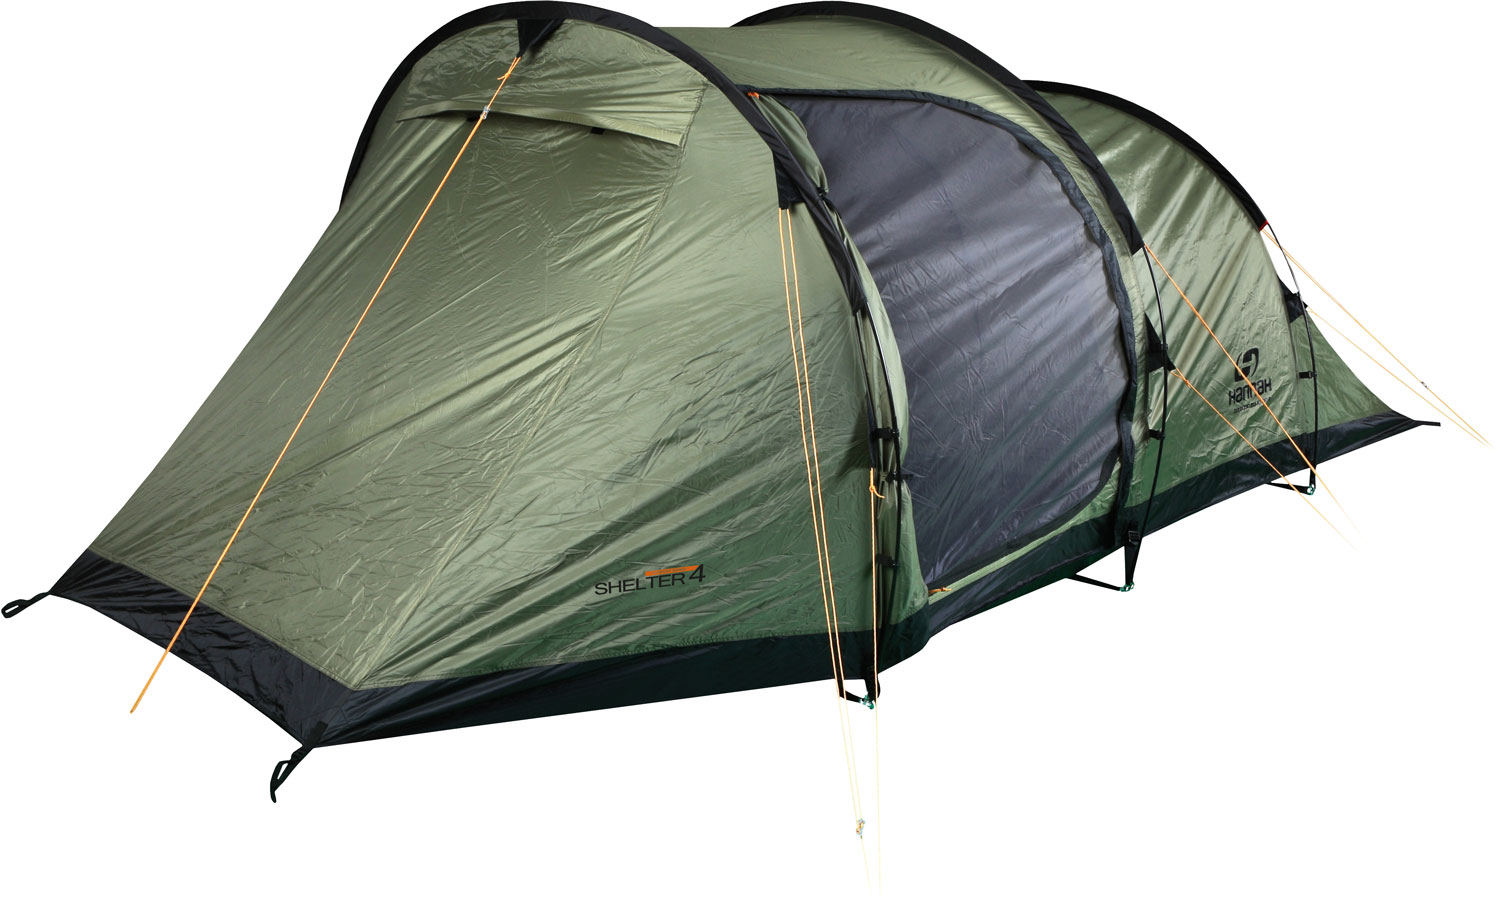 Recreational tent